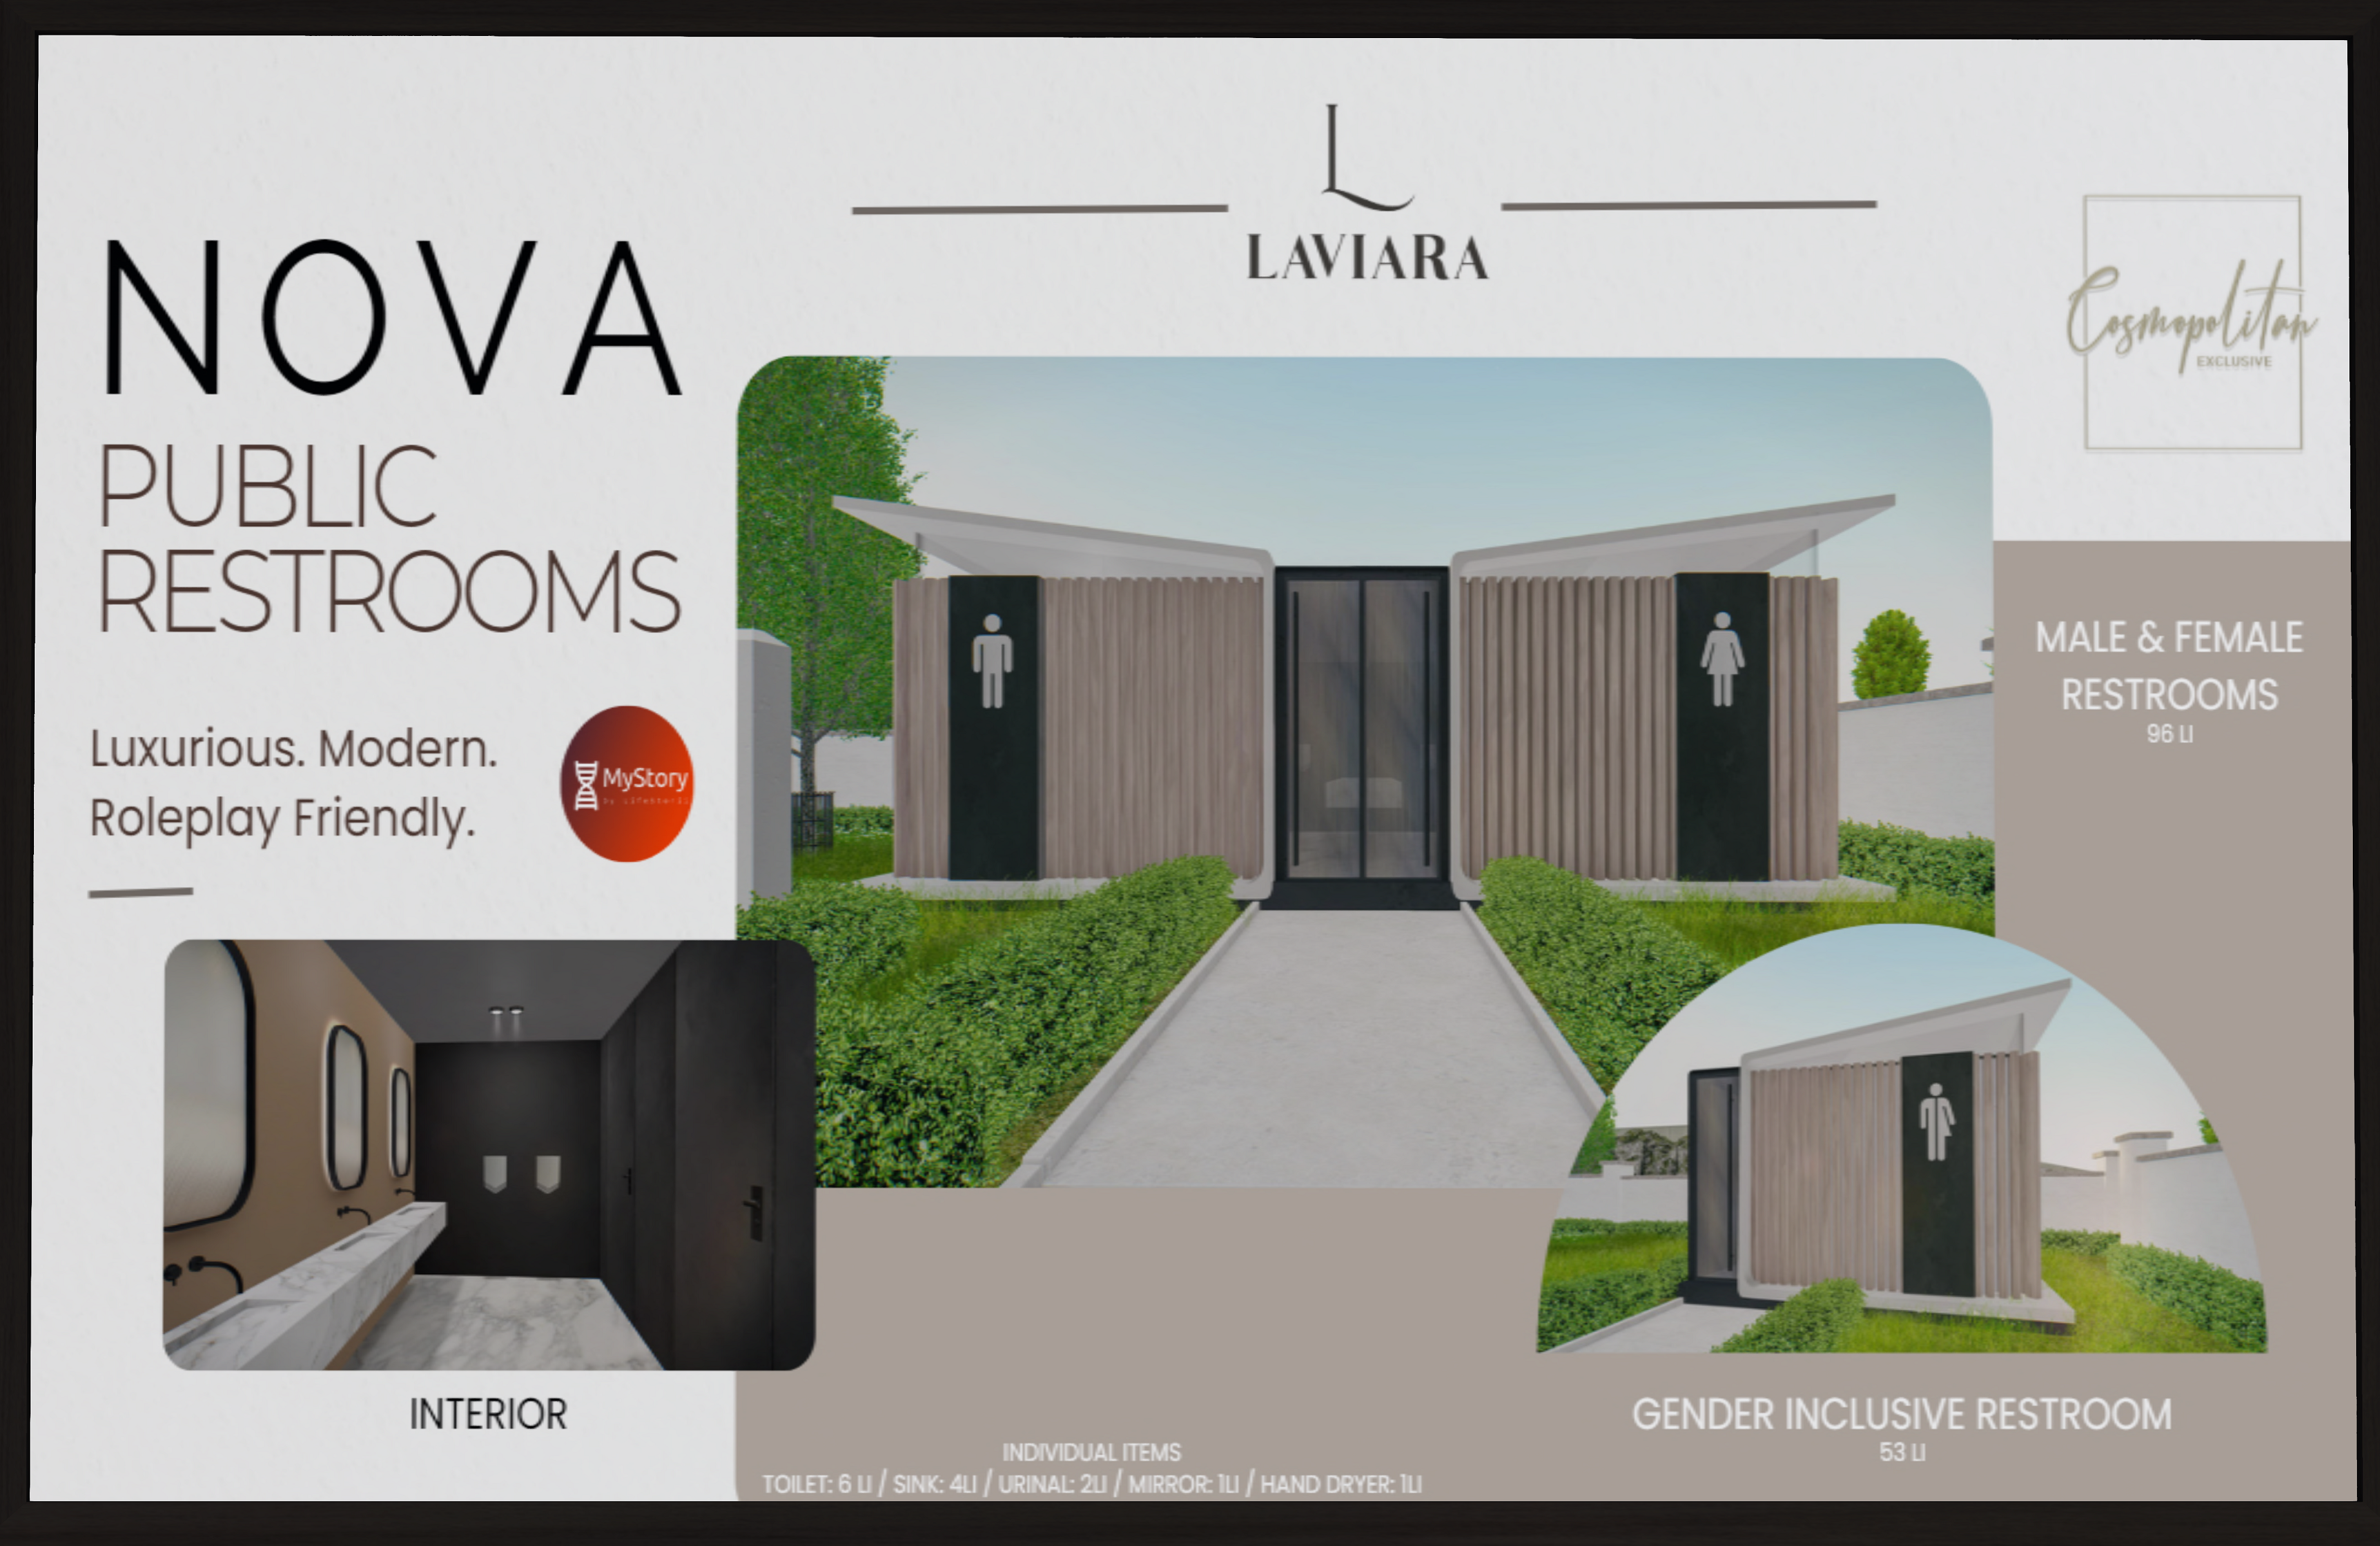 Laviara – Nova Public Restrooms